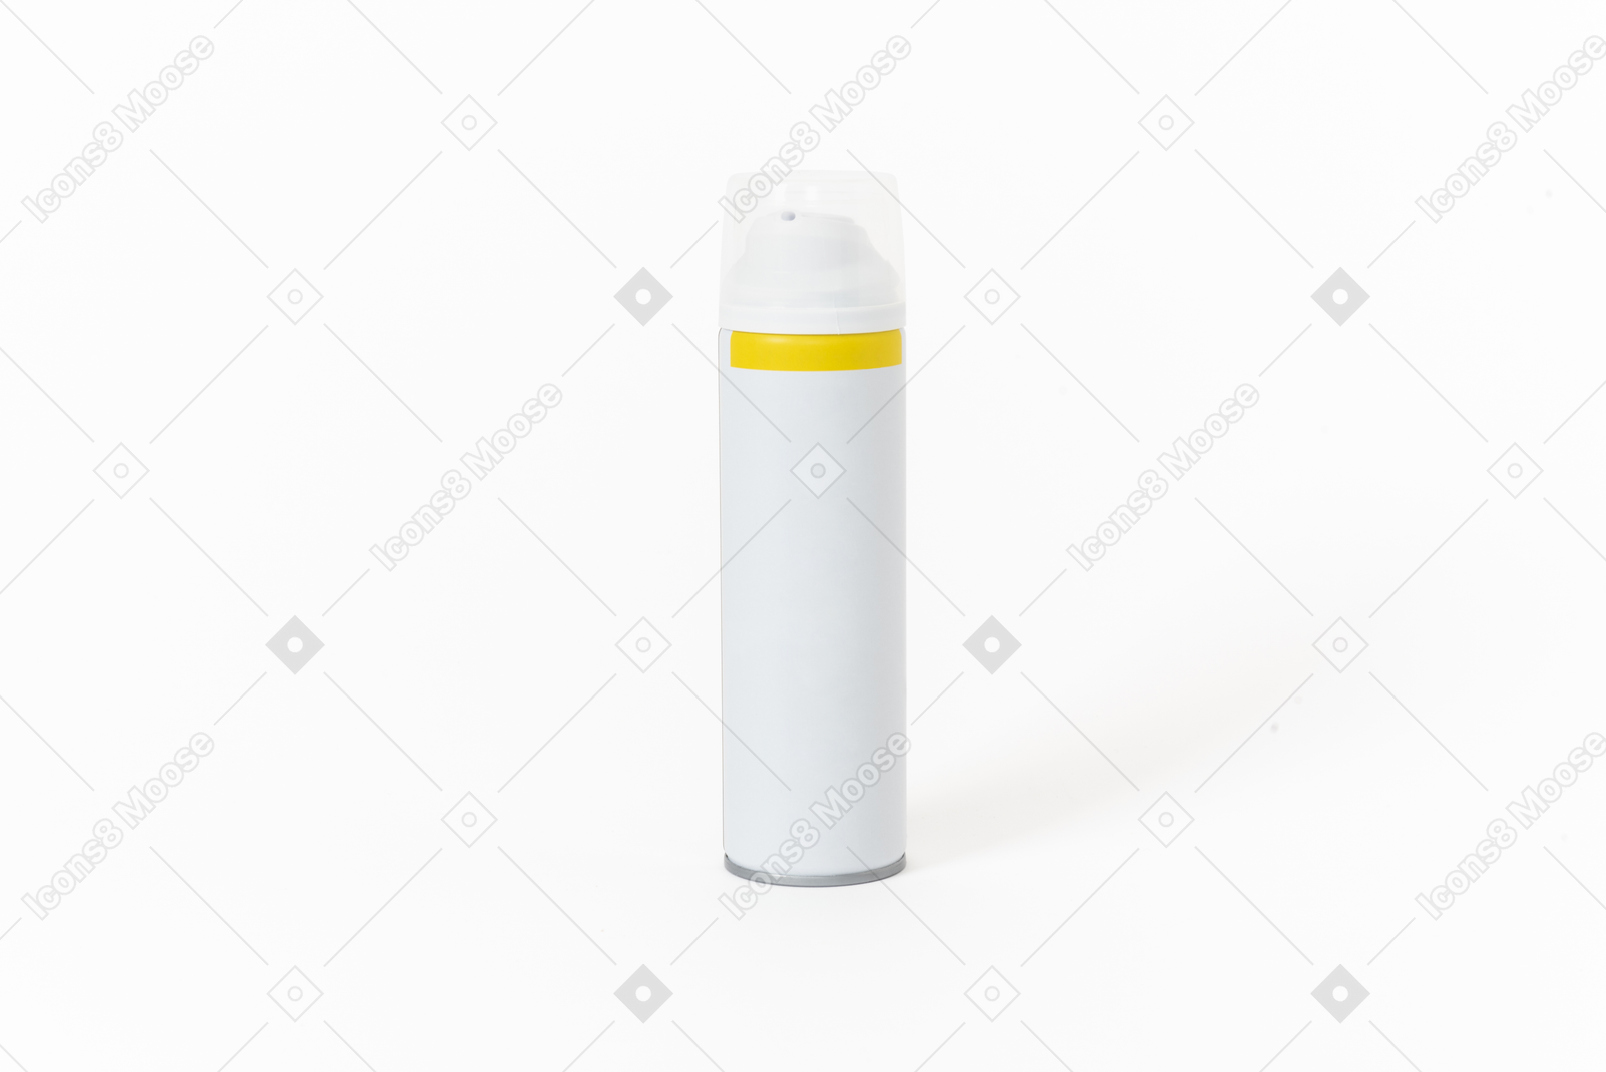 Deodorant bottle mockup